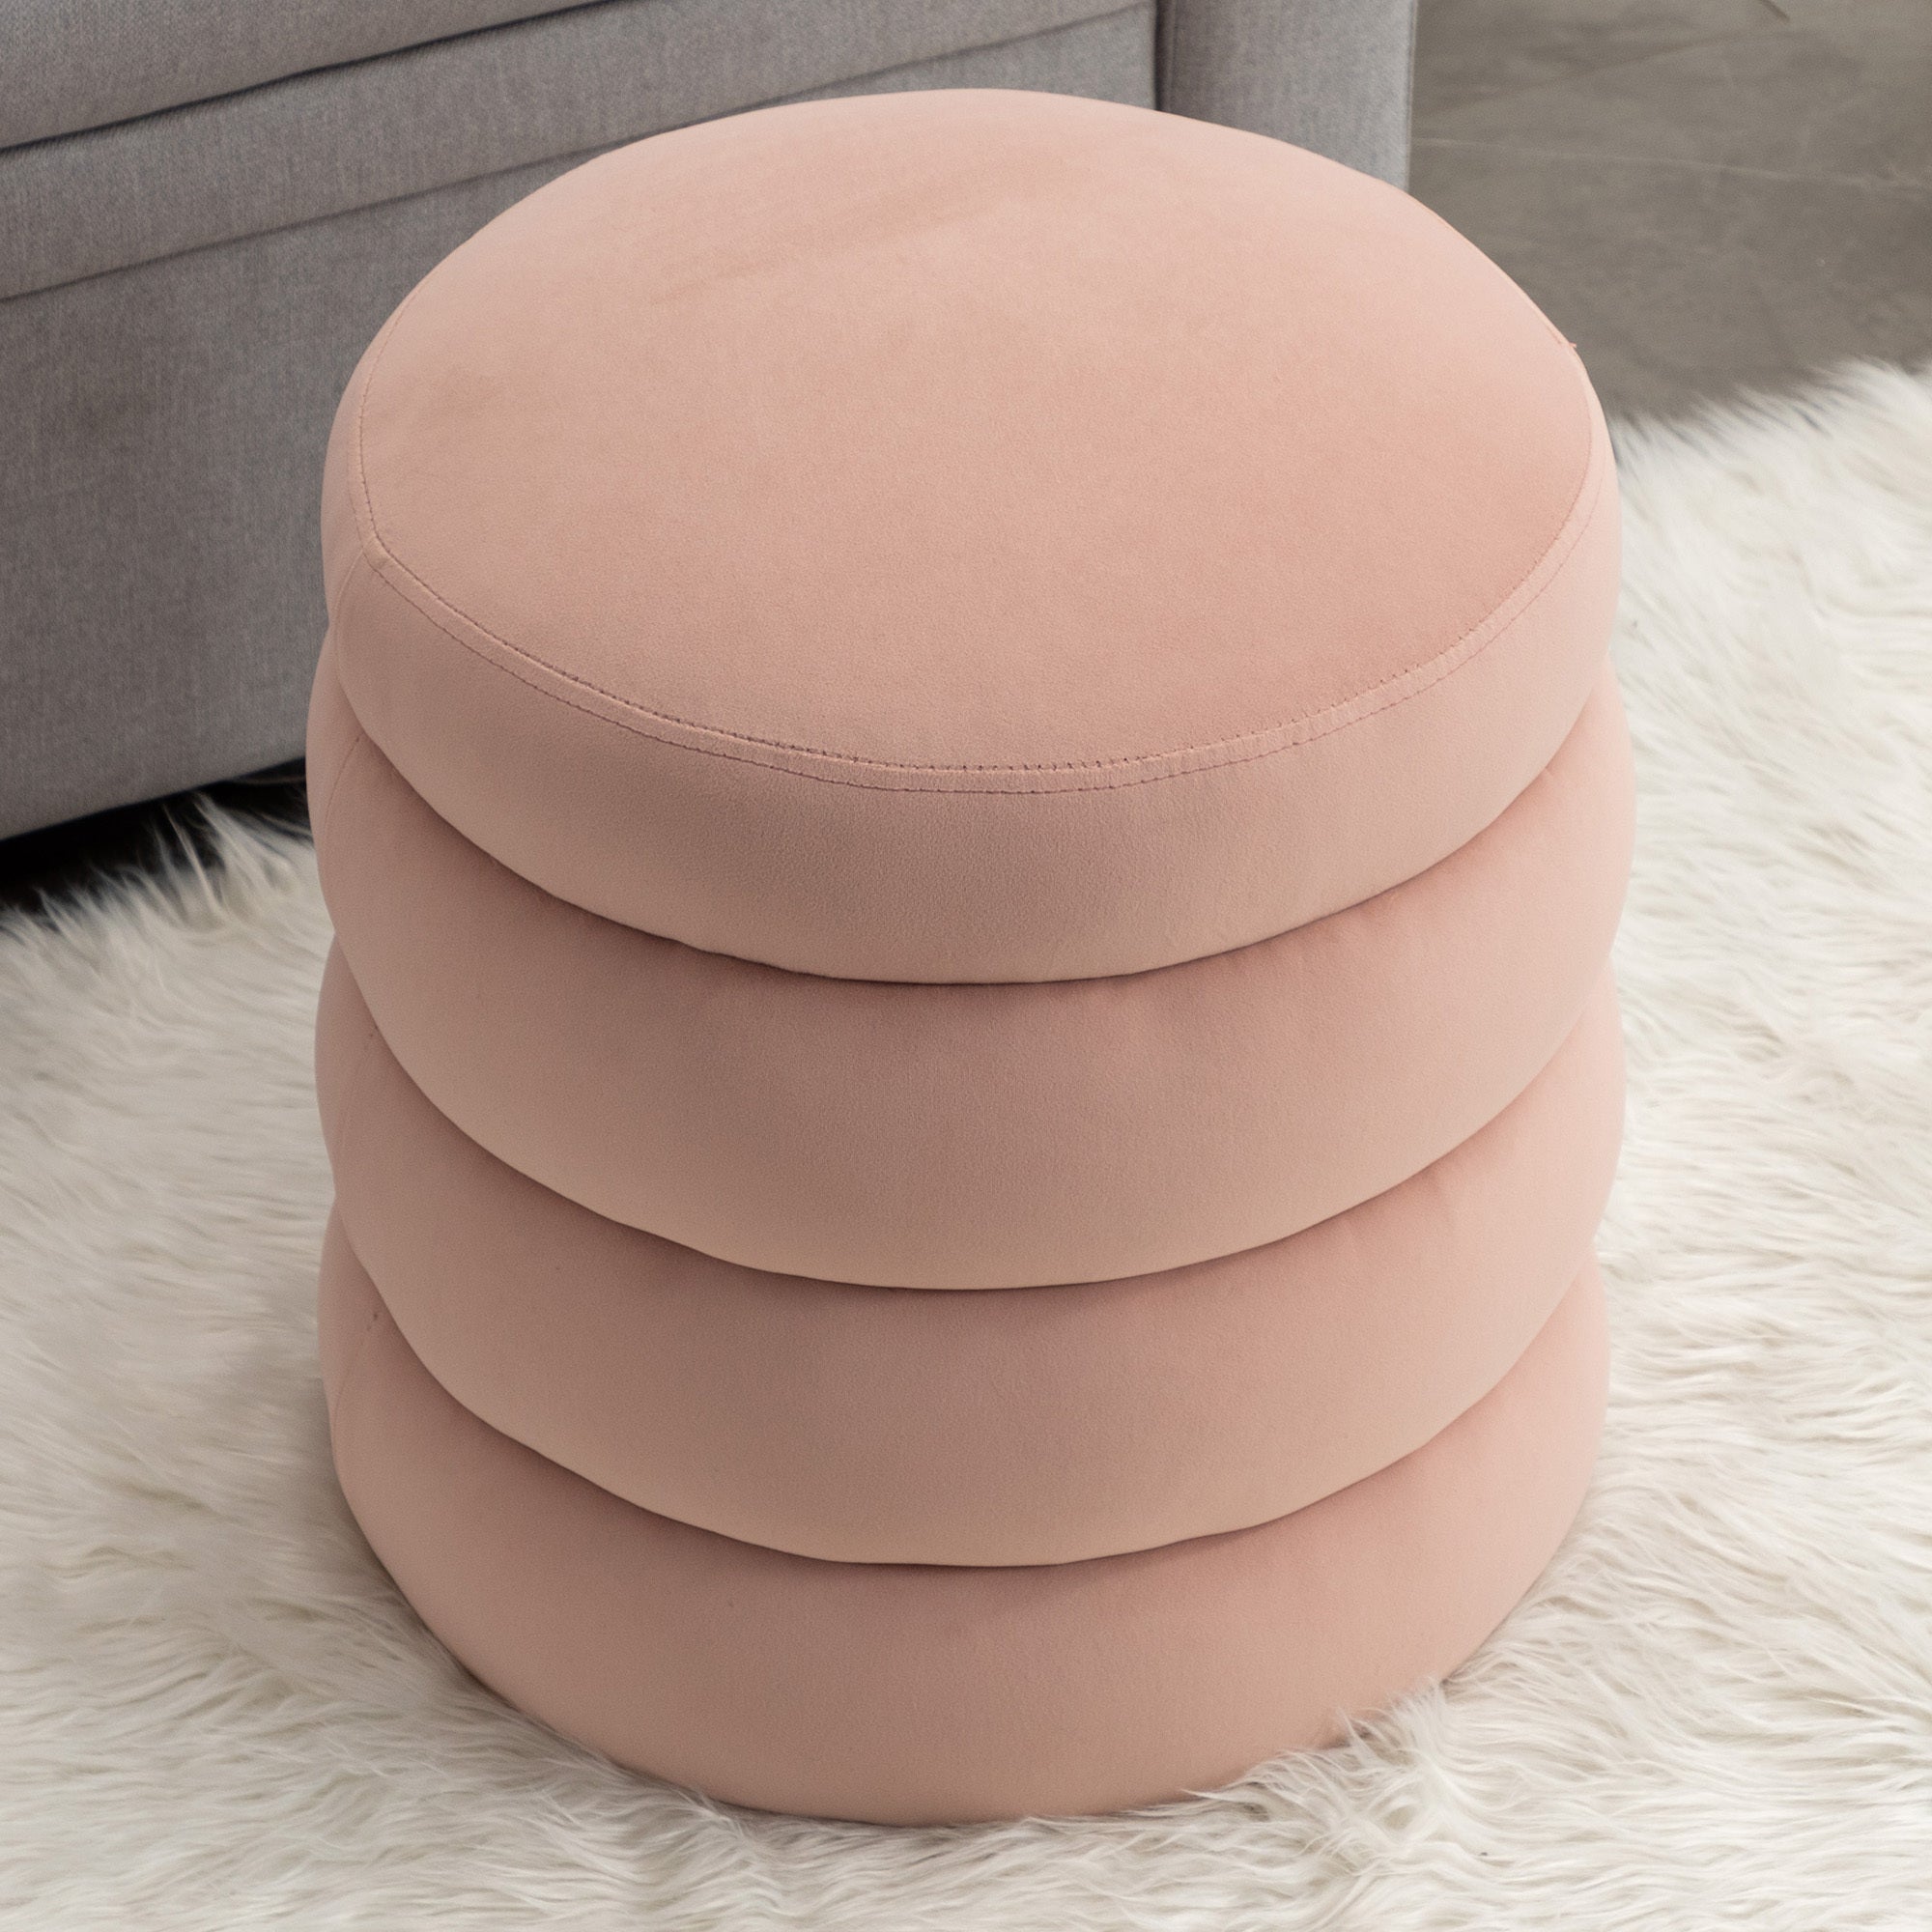 006-Soft Velvet Round Ottoman Footrest Stool,Pink